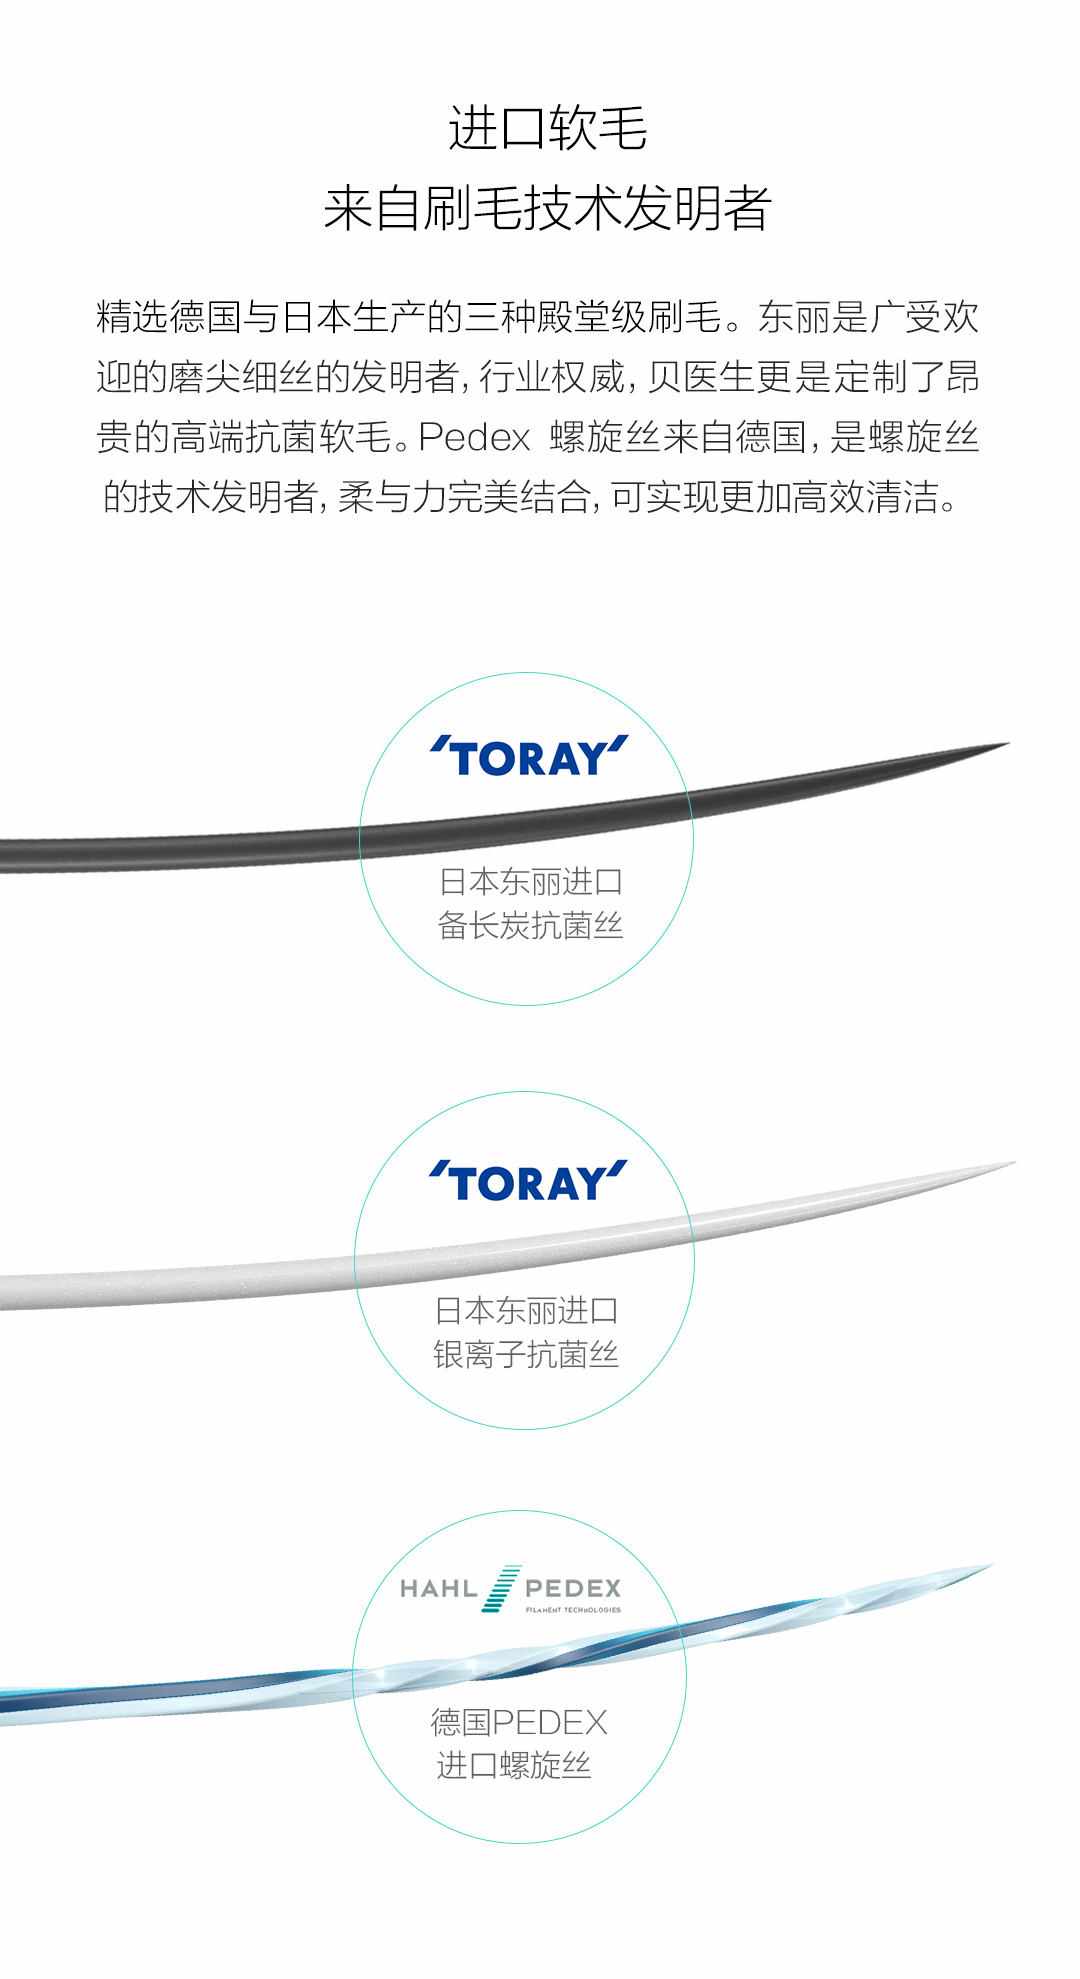 xiaomi dr.bei pap bass method support toothbrush